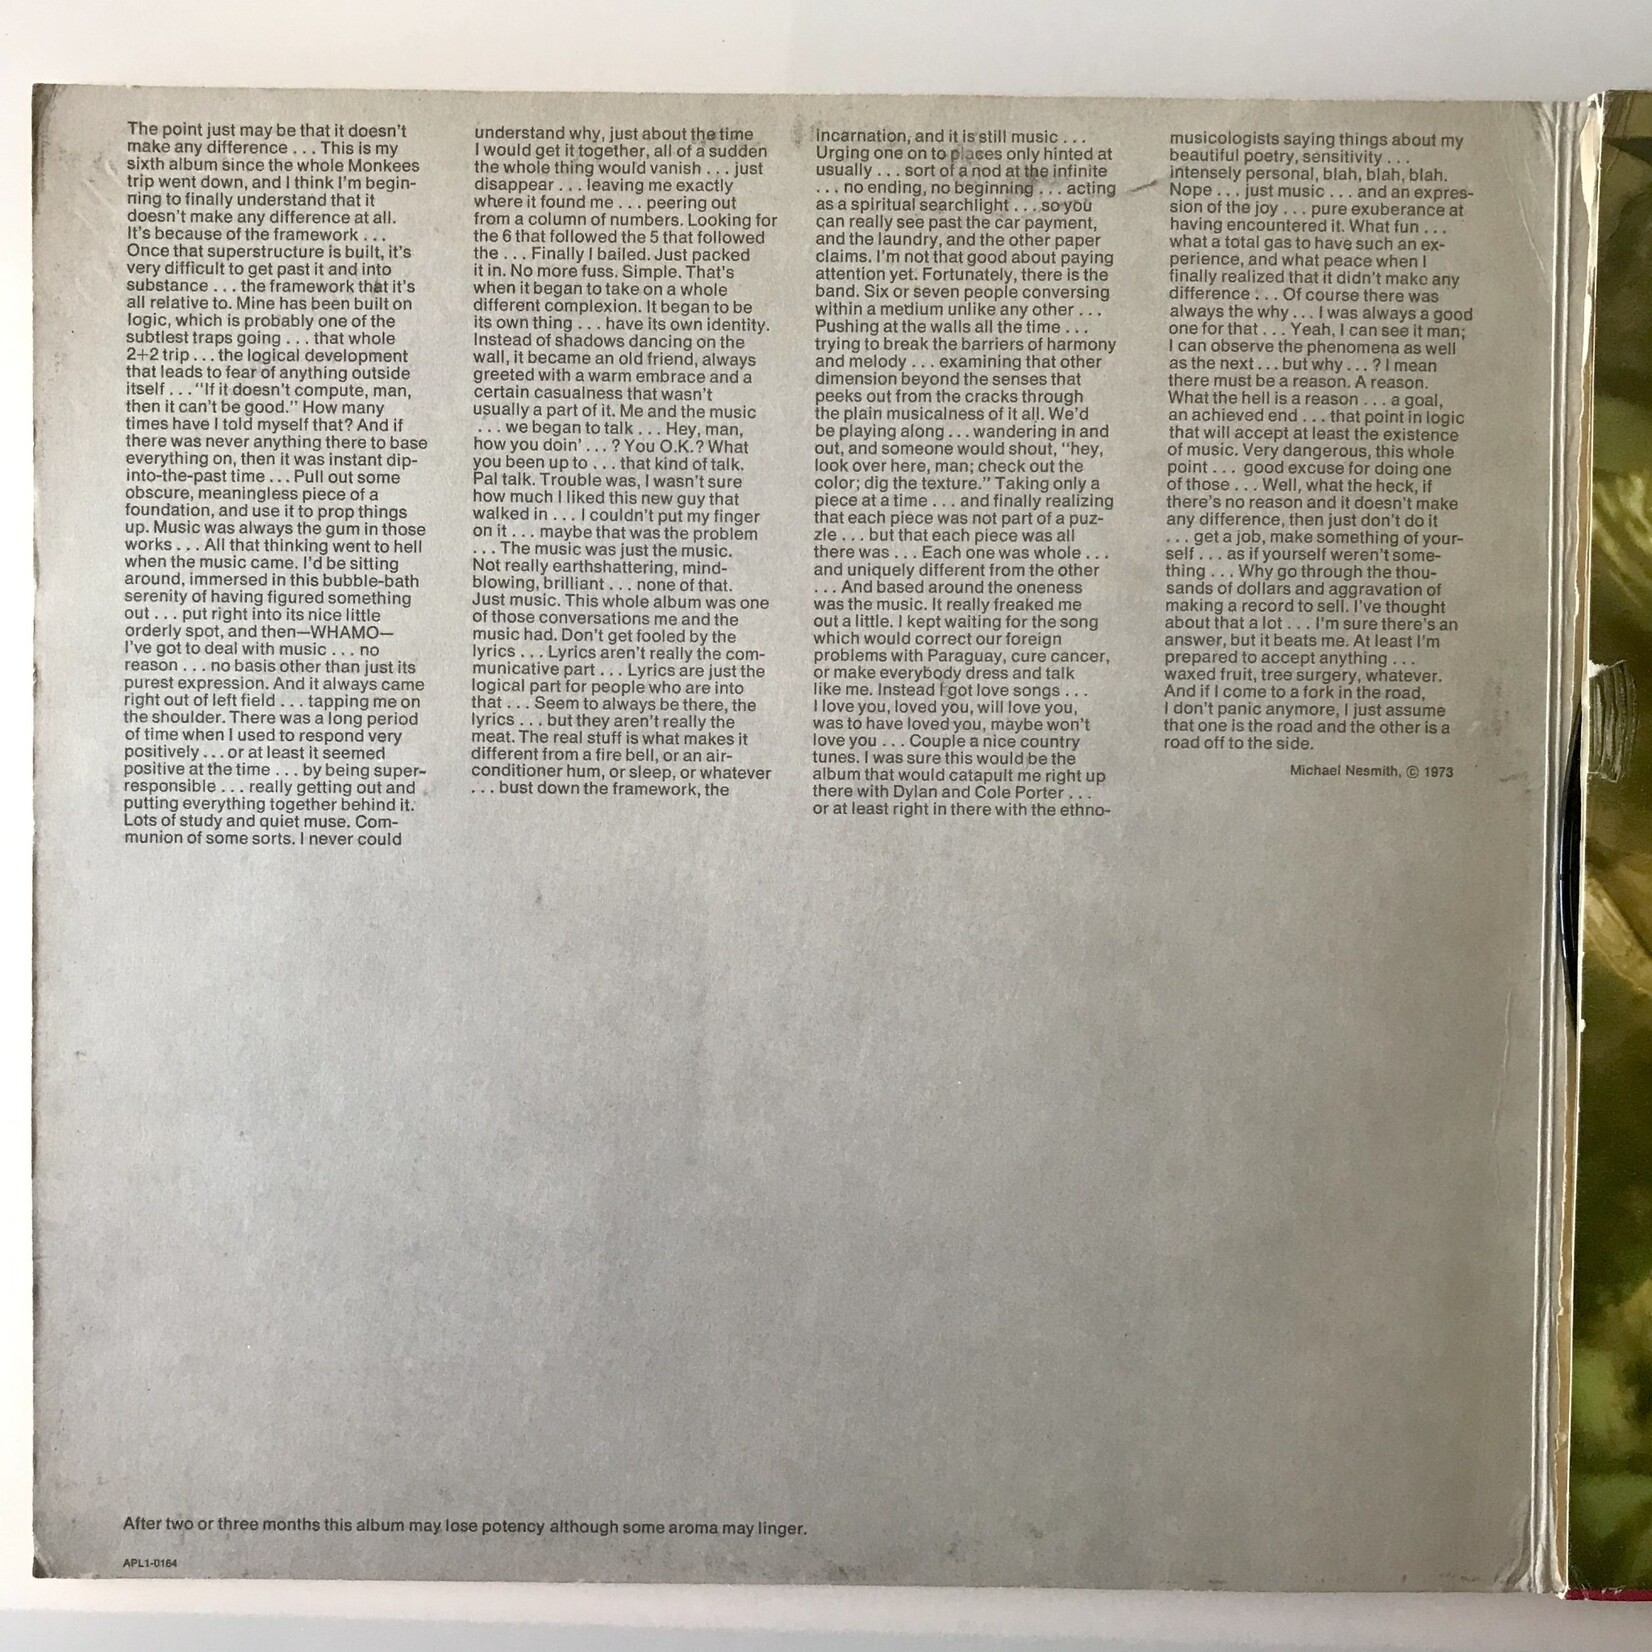 Michael Nesmith - Pretty Much Your Standard Ranch Stash - Vinyl LP (USED)